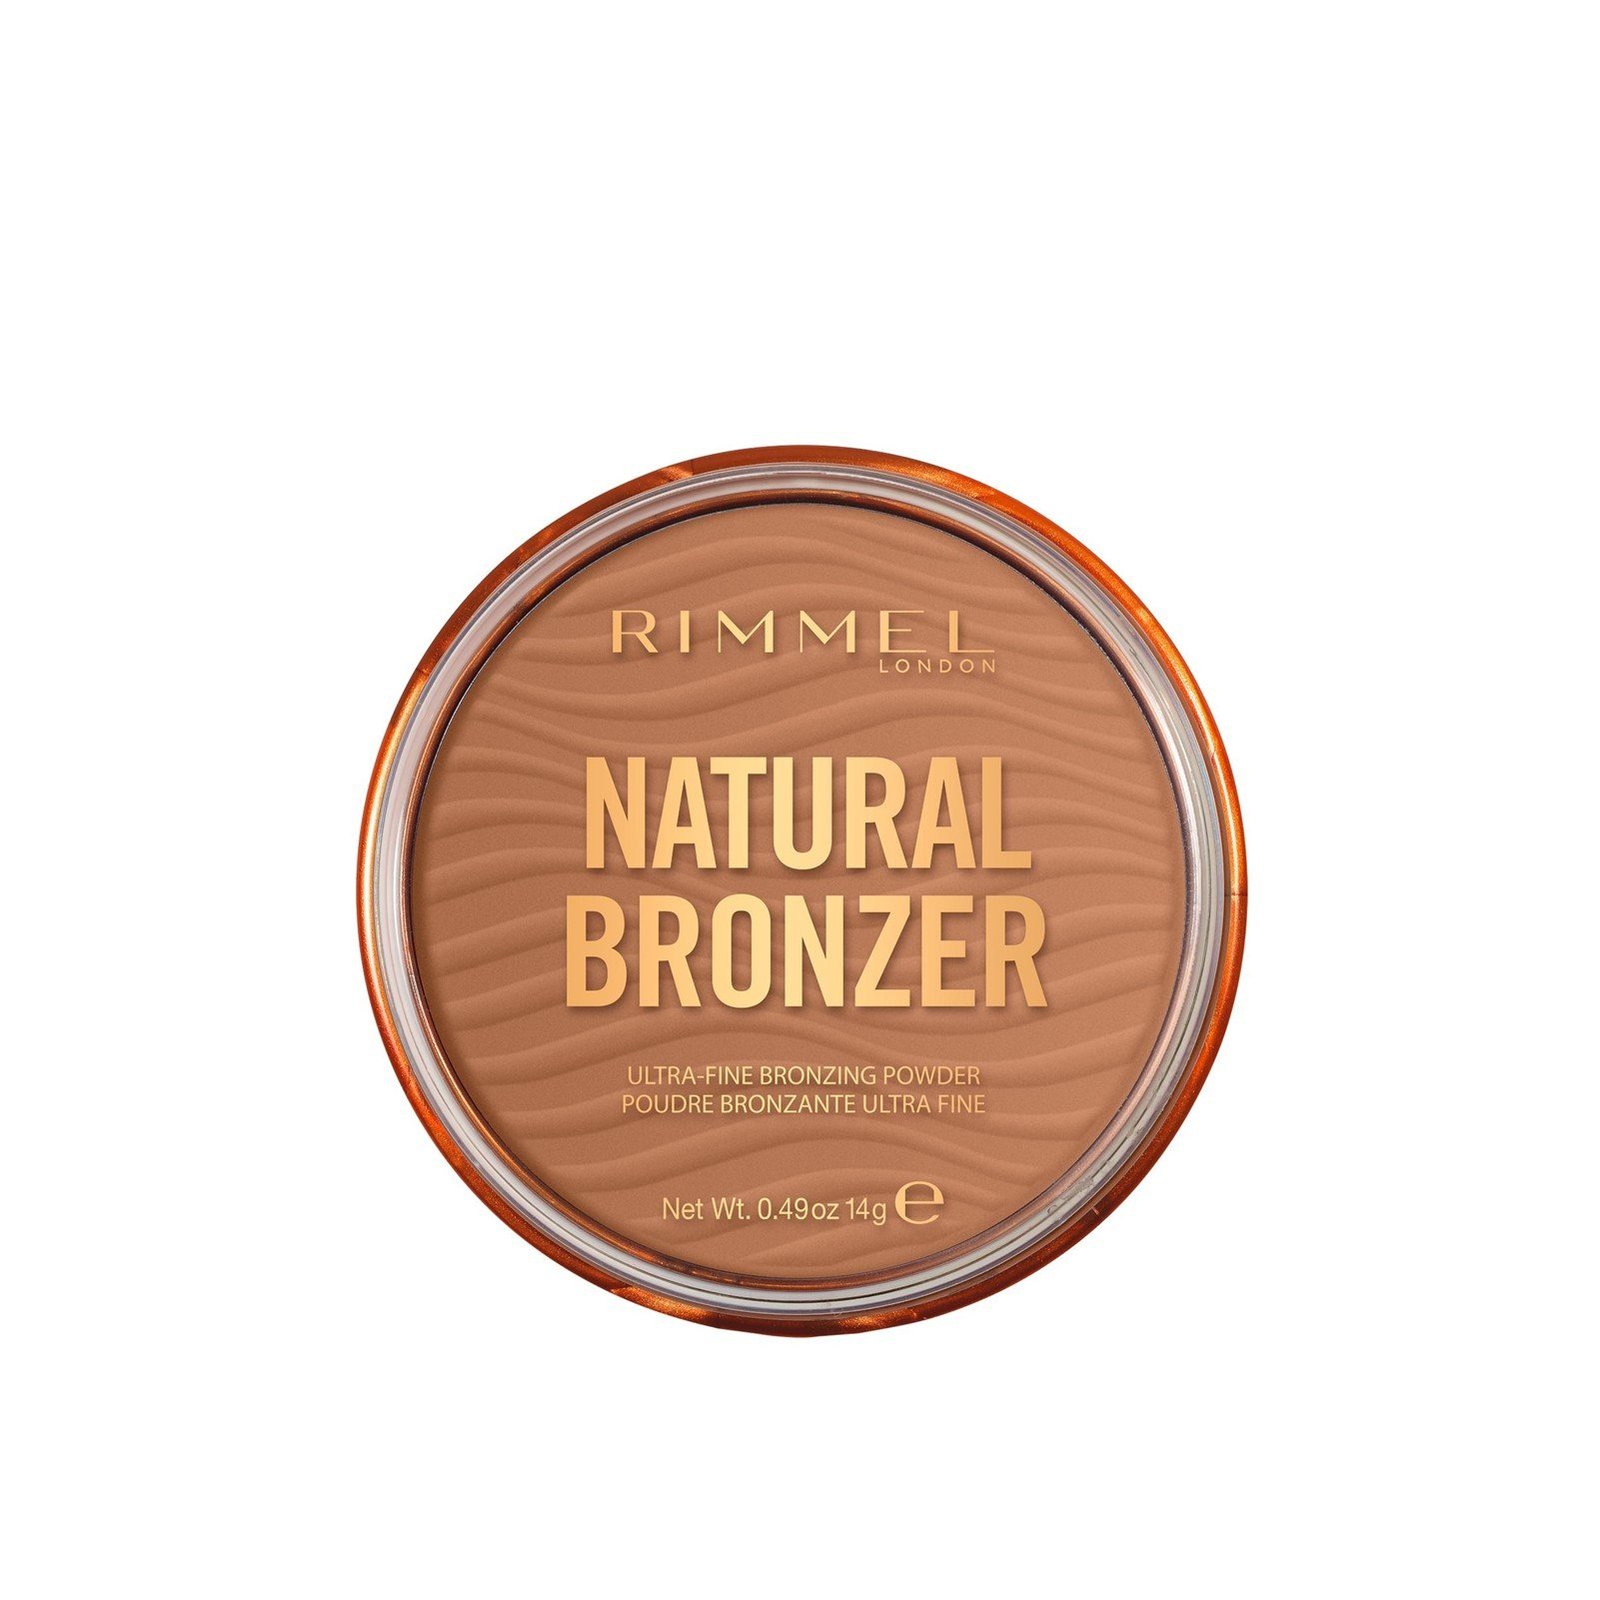 Rimmel London Natural Bronzer Waterproof Bronzing Powder SPF15 002 14g (0.49oz)